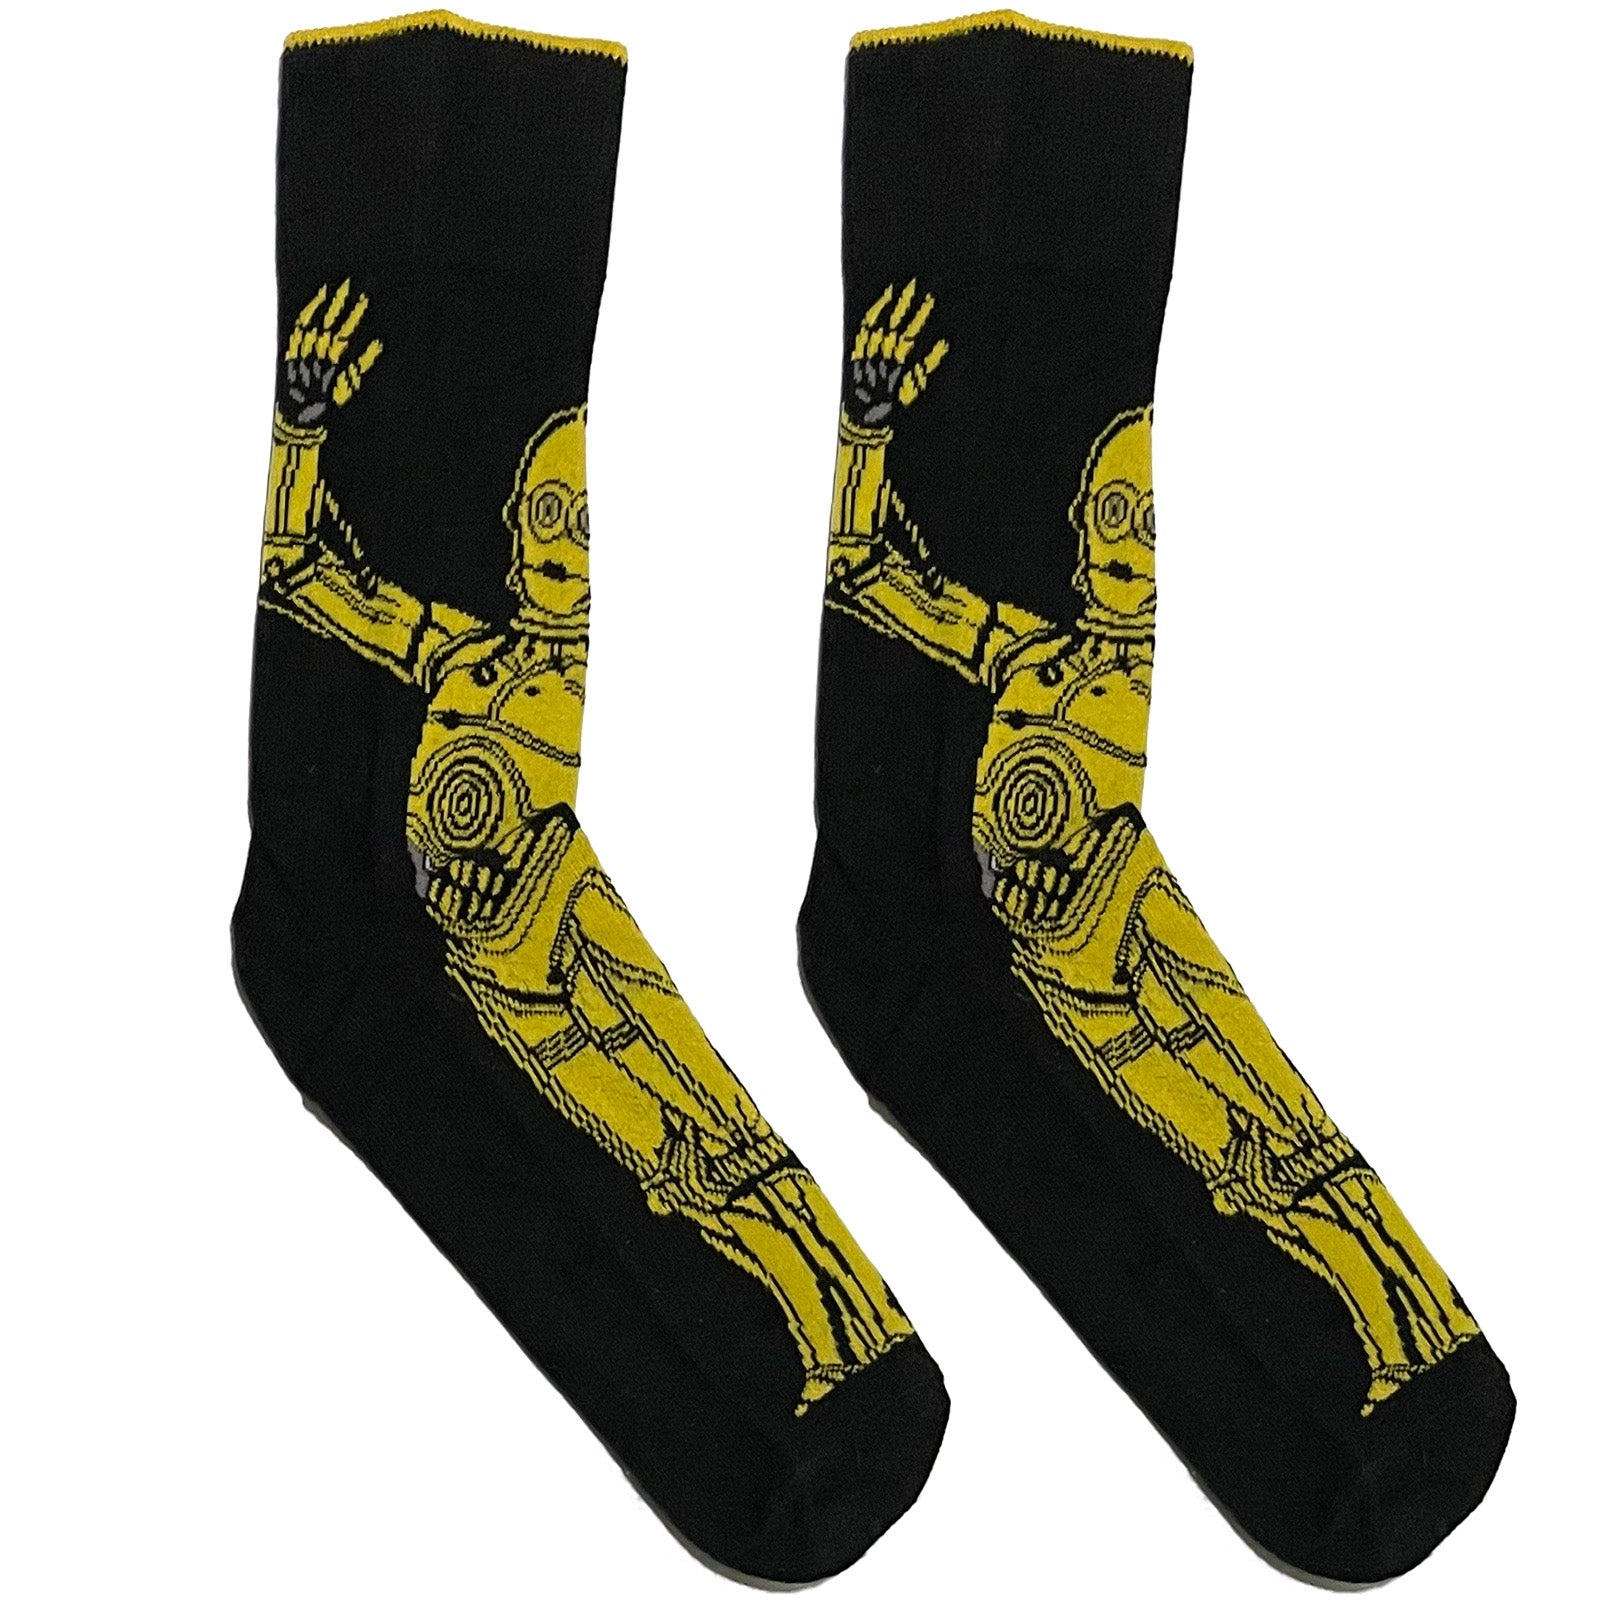 Black And Yellow Robot Short Crew Socks